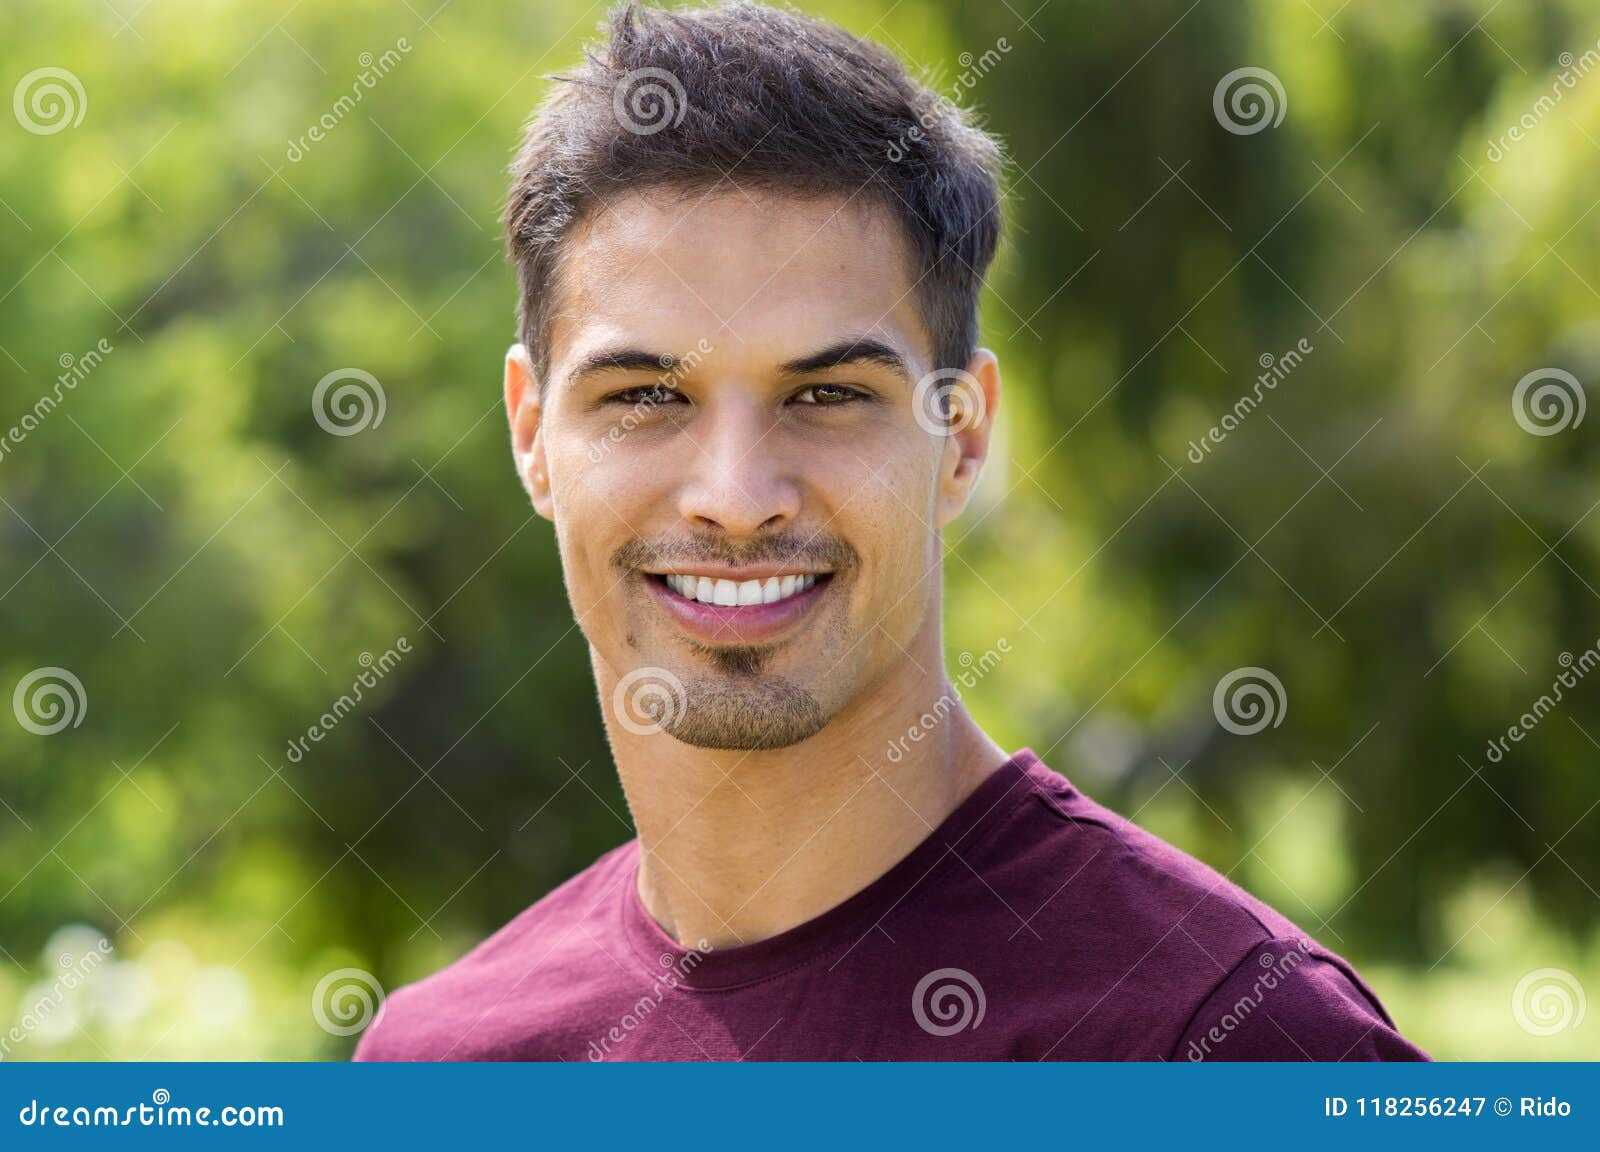 portrait of latin guy smiling